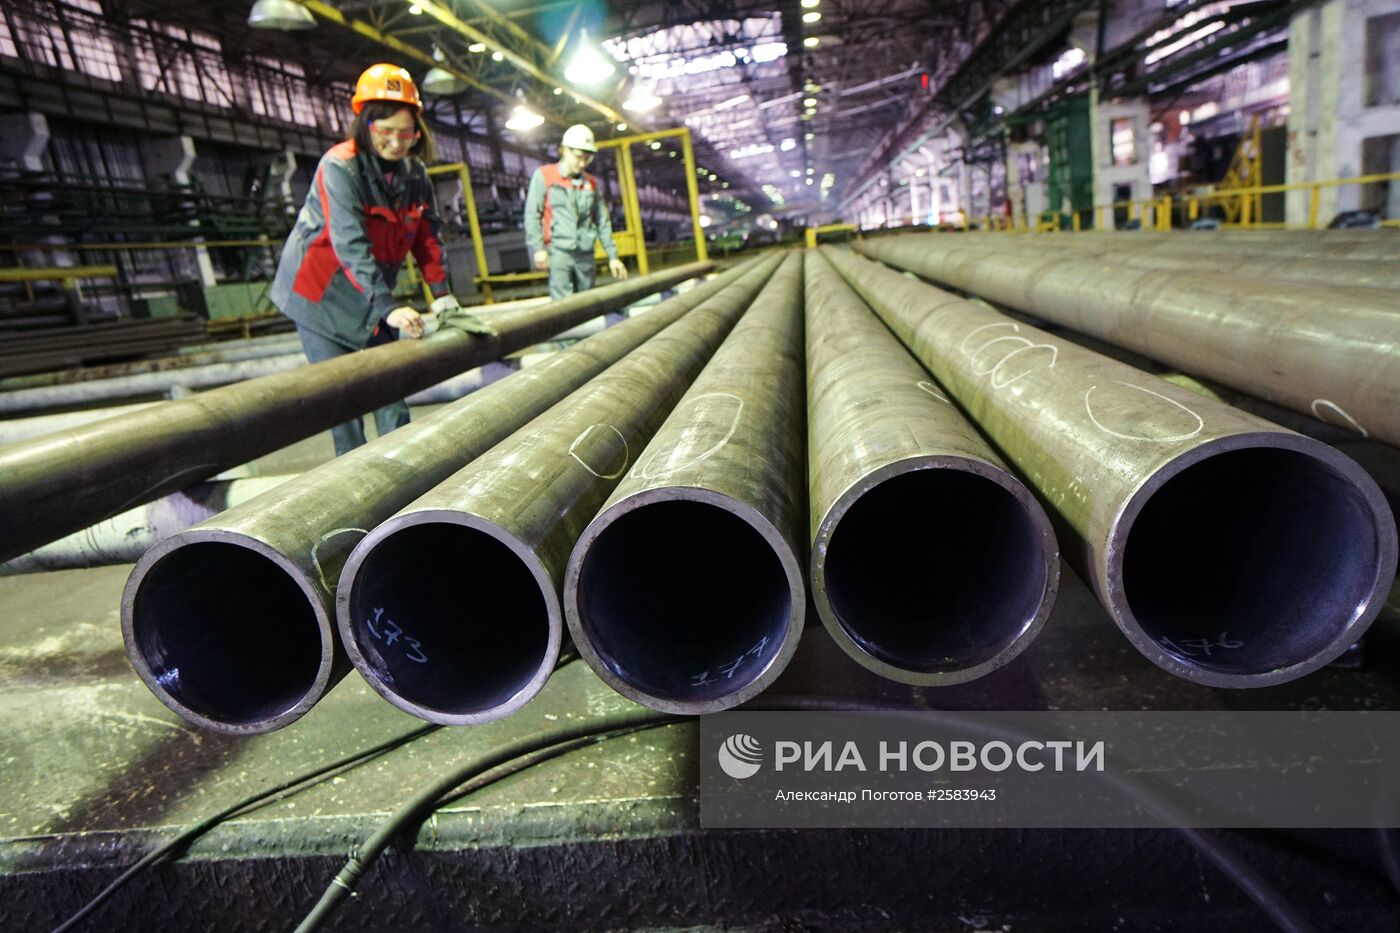 Таганрогский металлургический завод